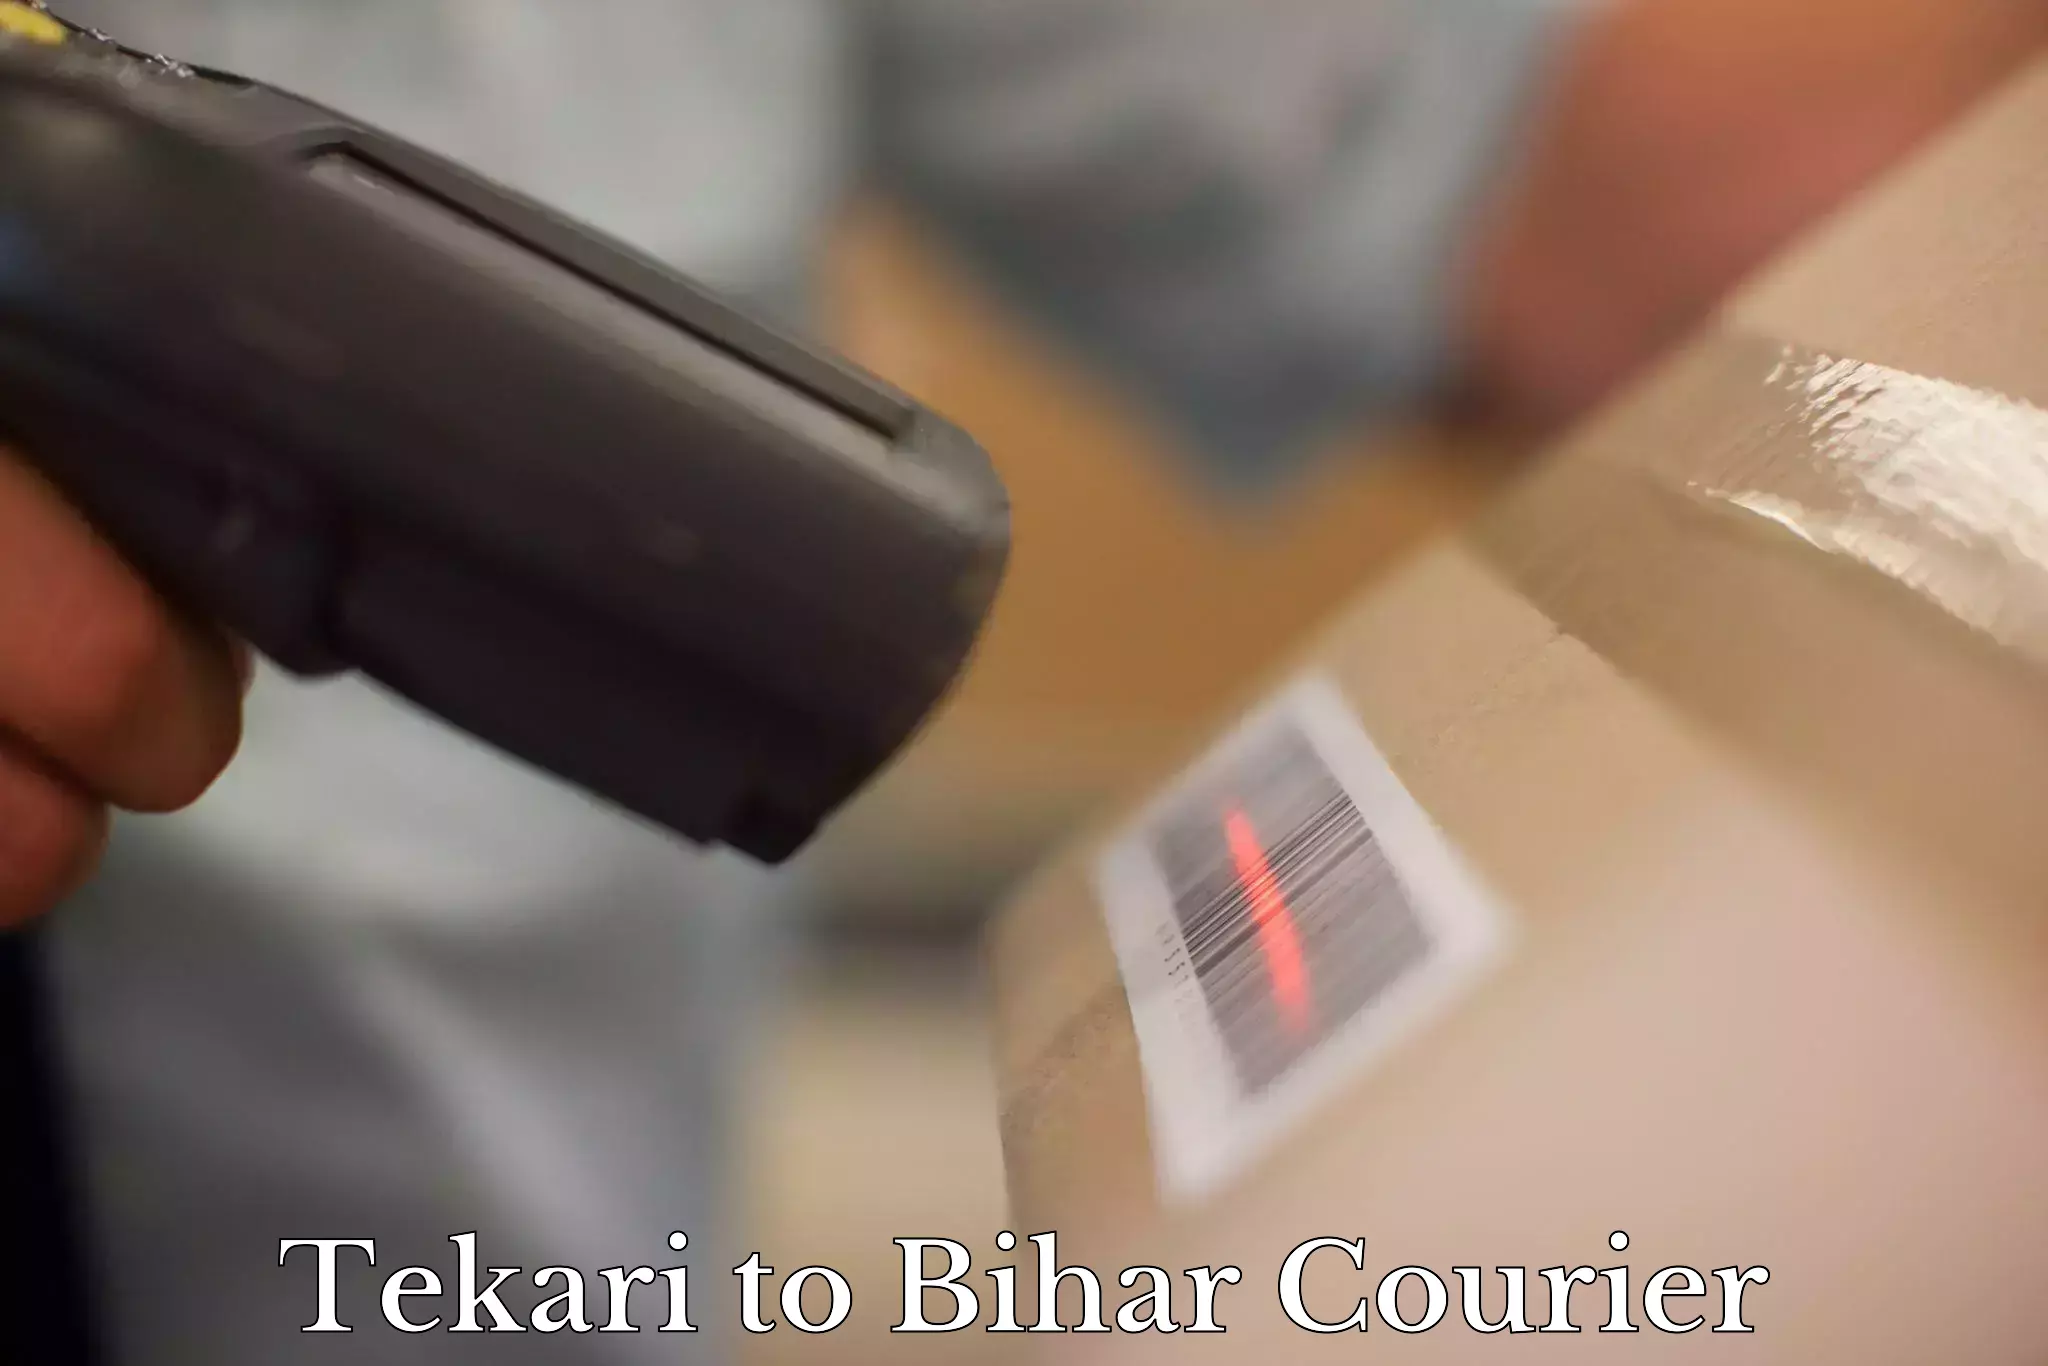 Residential moving experts Tekari to Bihar